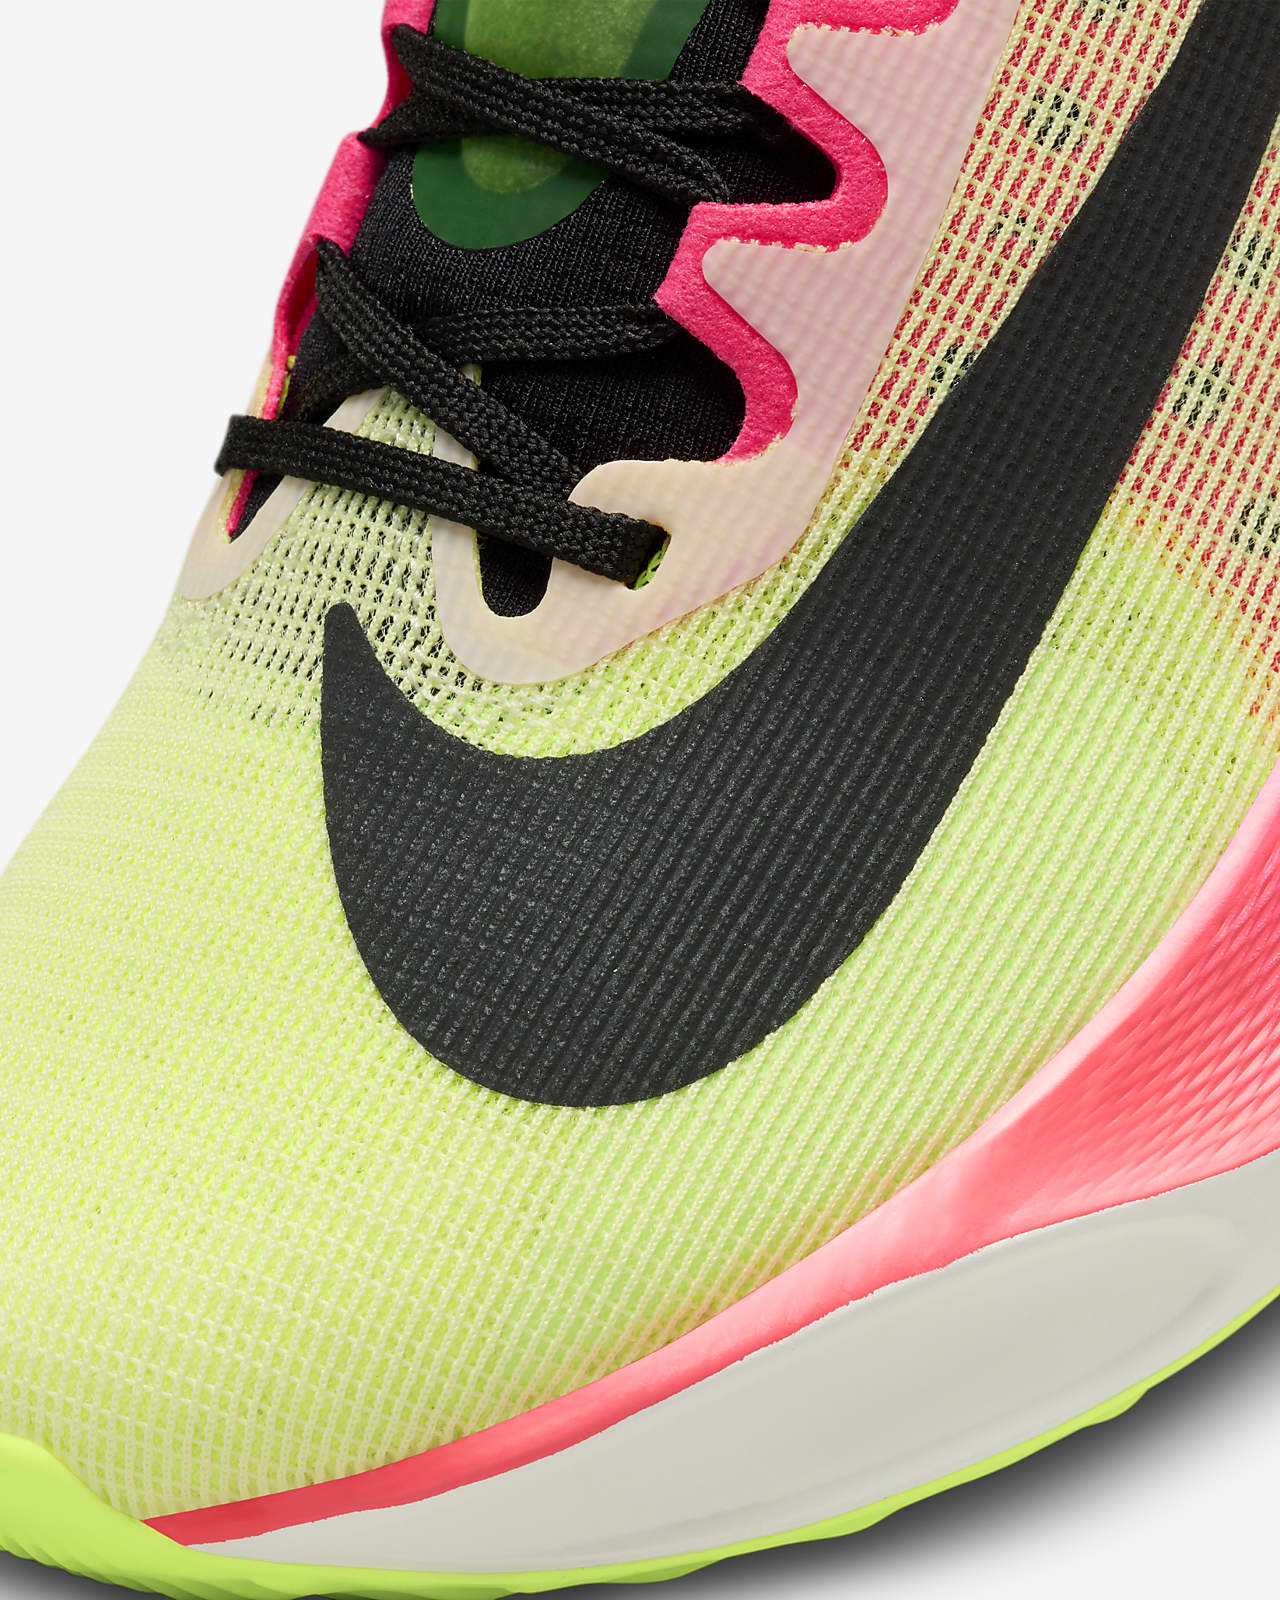 Nike Zoom Fly 5 Premium Men's Road Running Shoes.